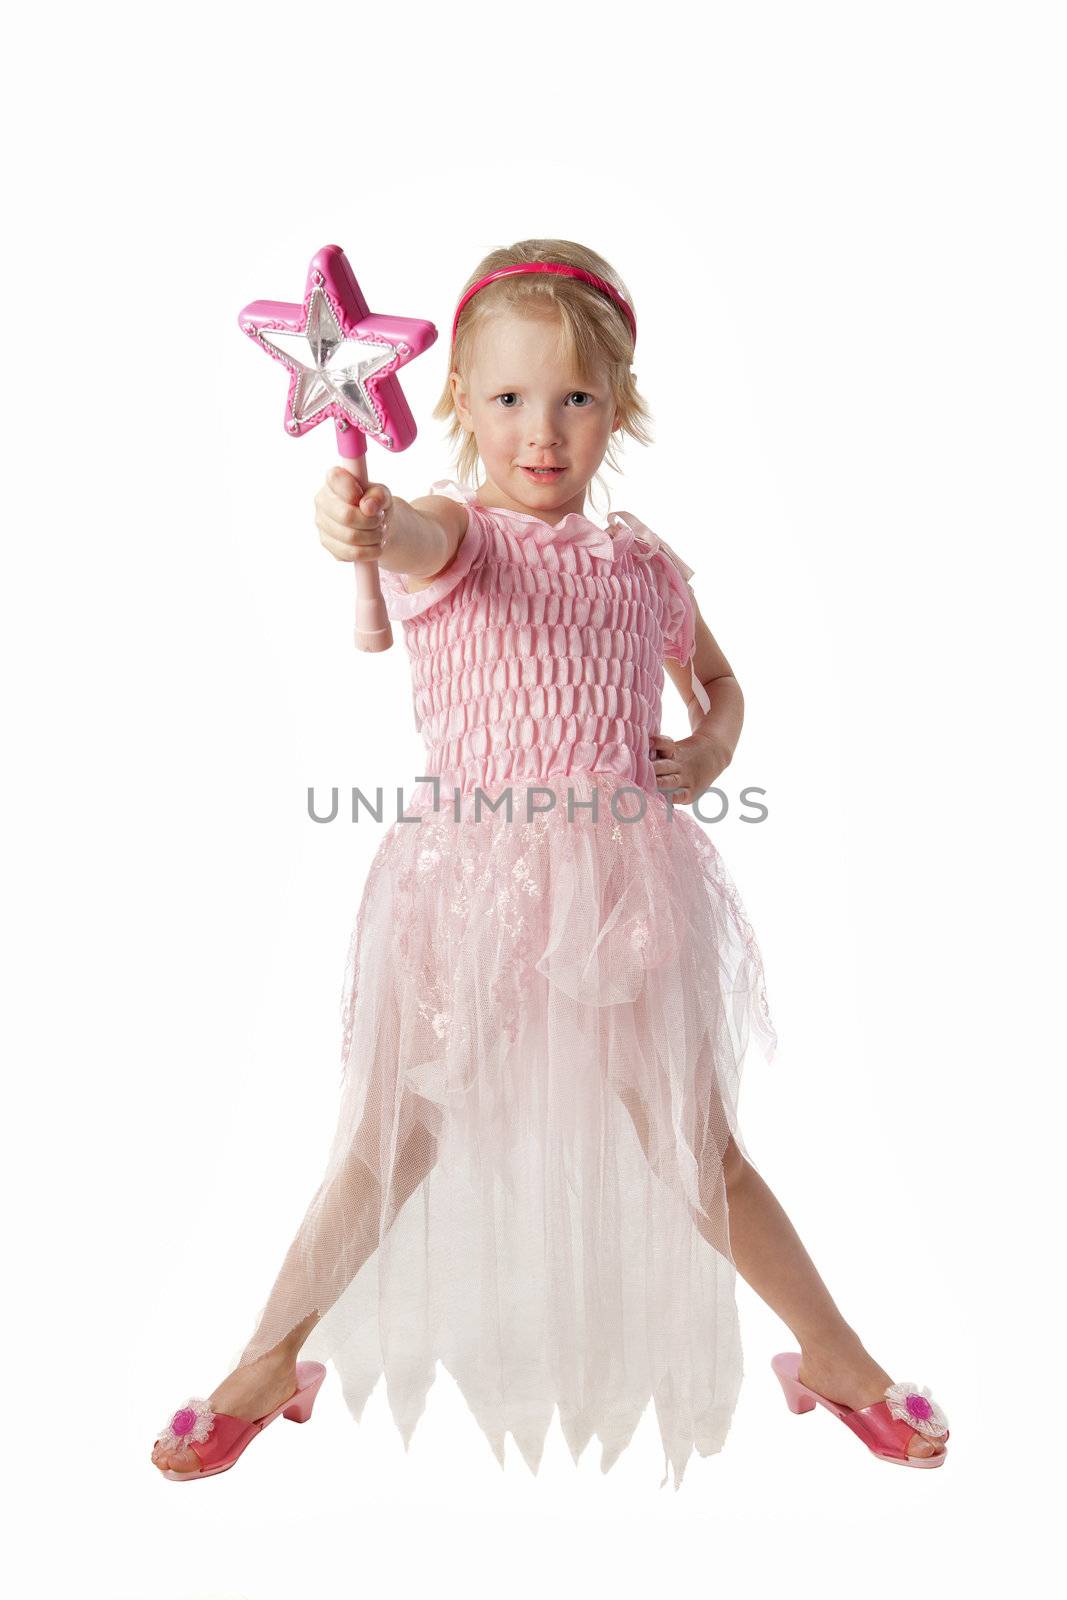 Little girl dressed like a pretty fairy